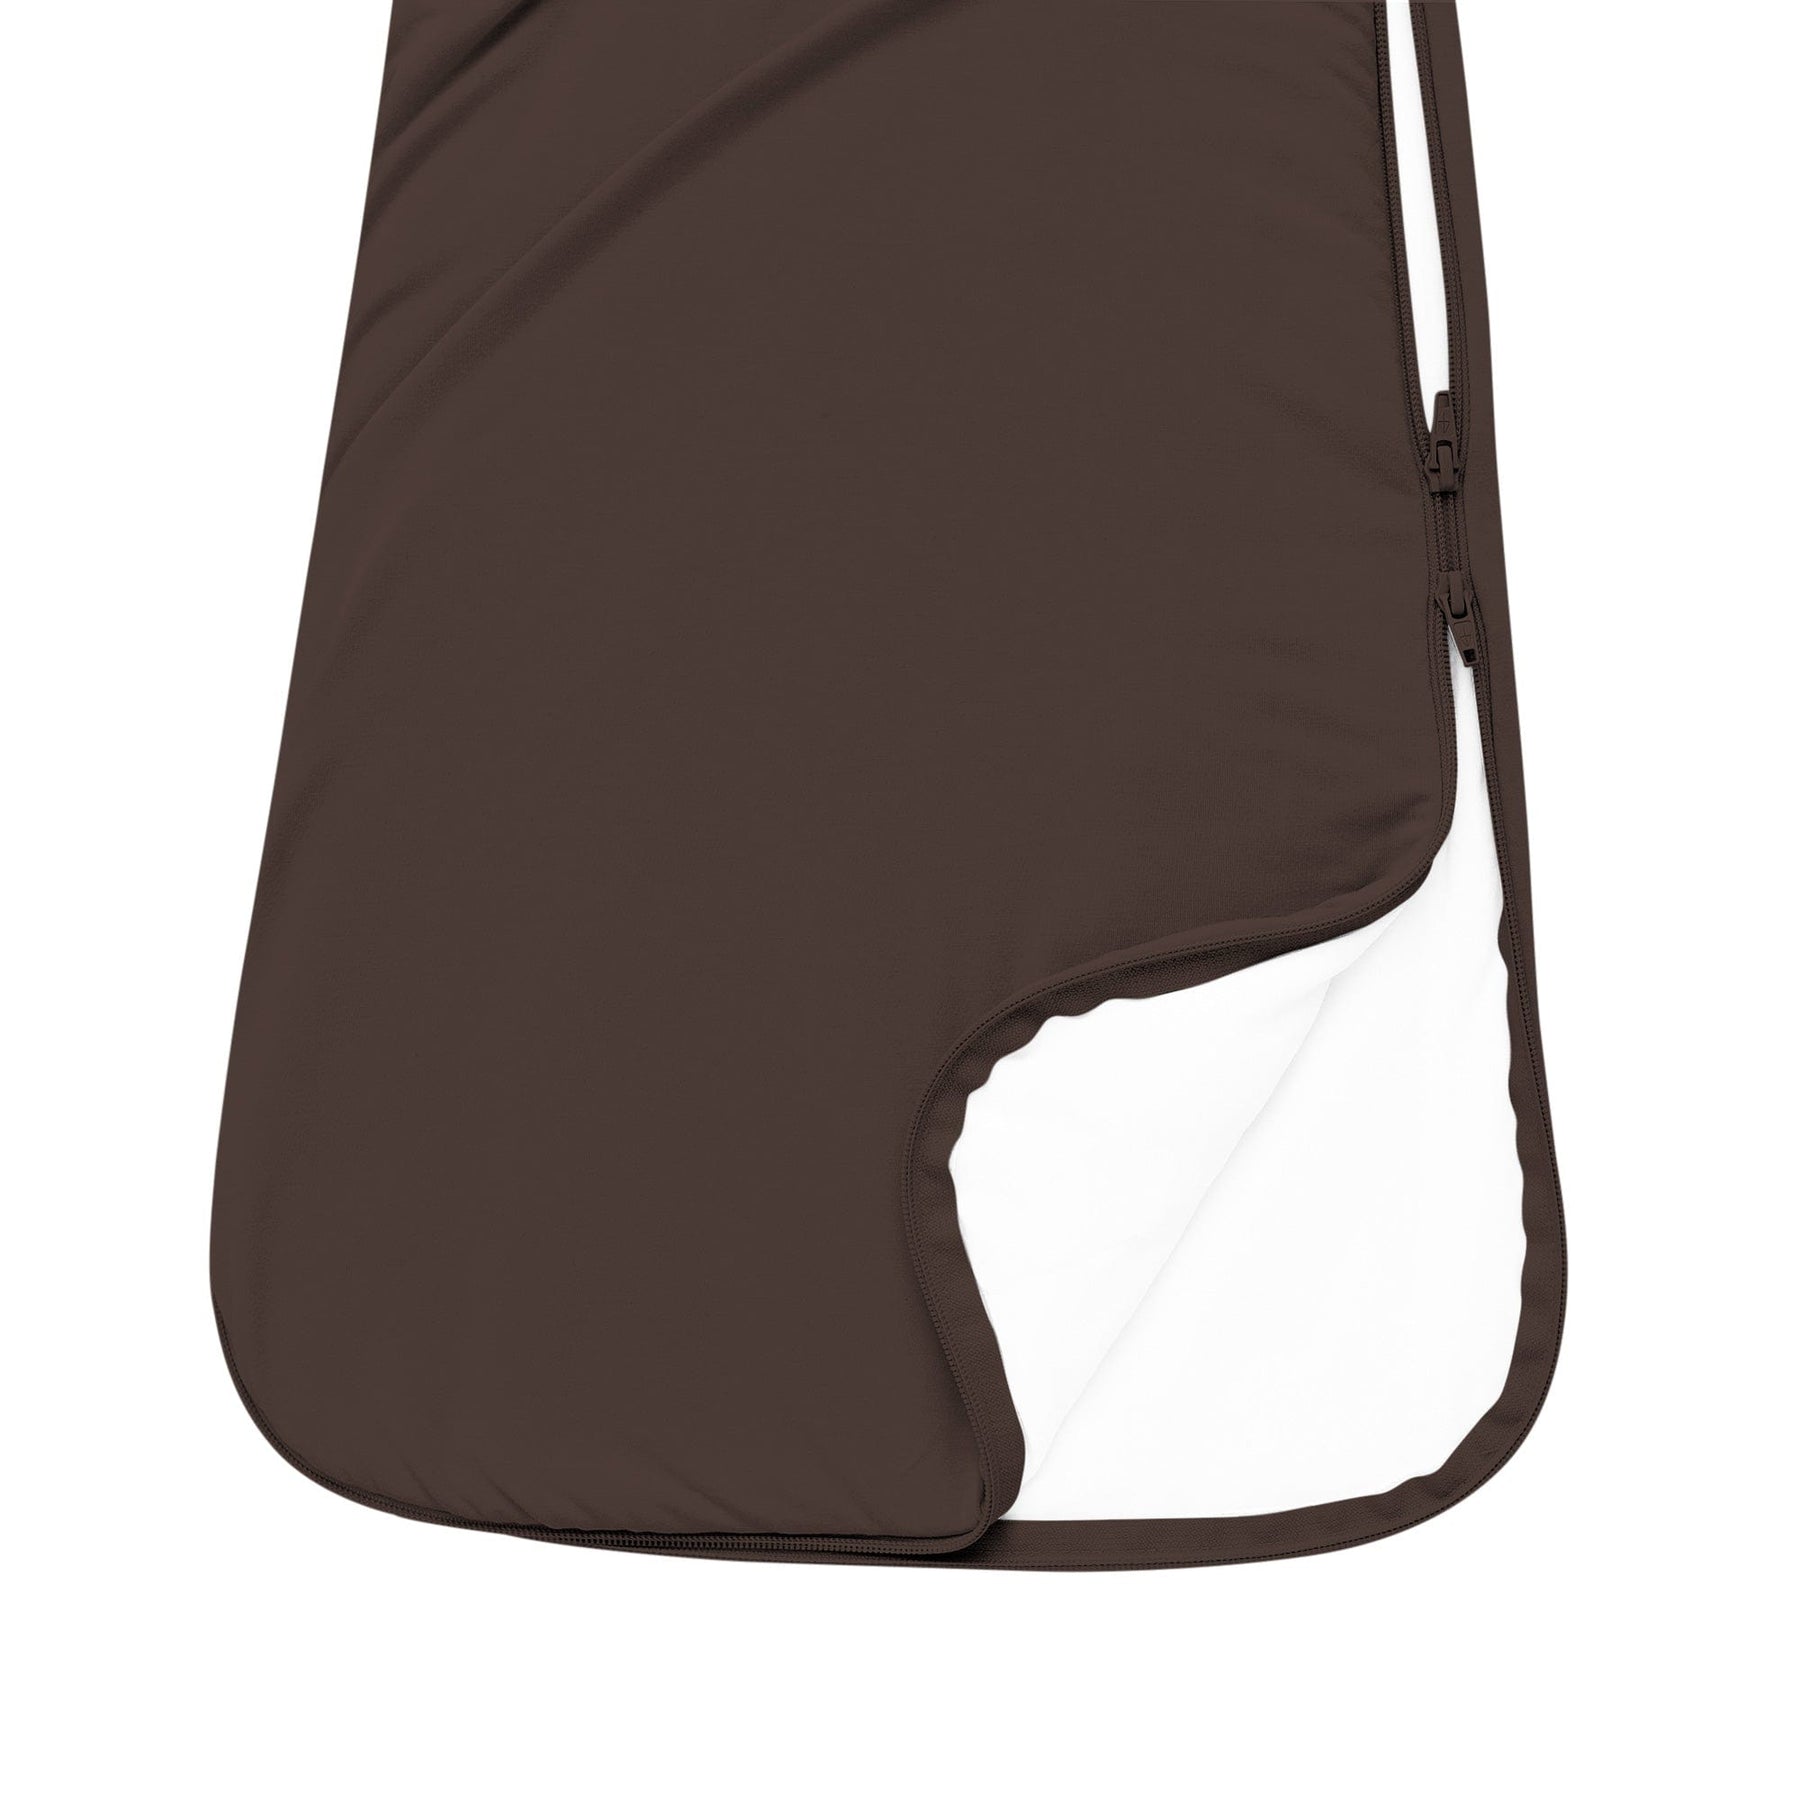 Kyte Baby Sleep Bag 1.0 Tog Sleep Bag in Espresso 1.0